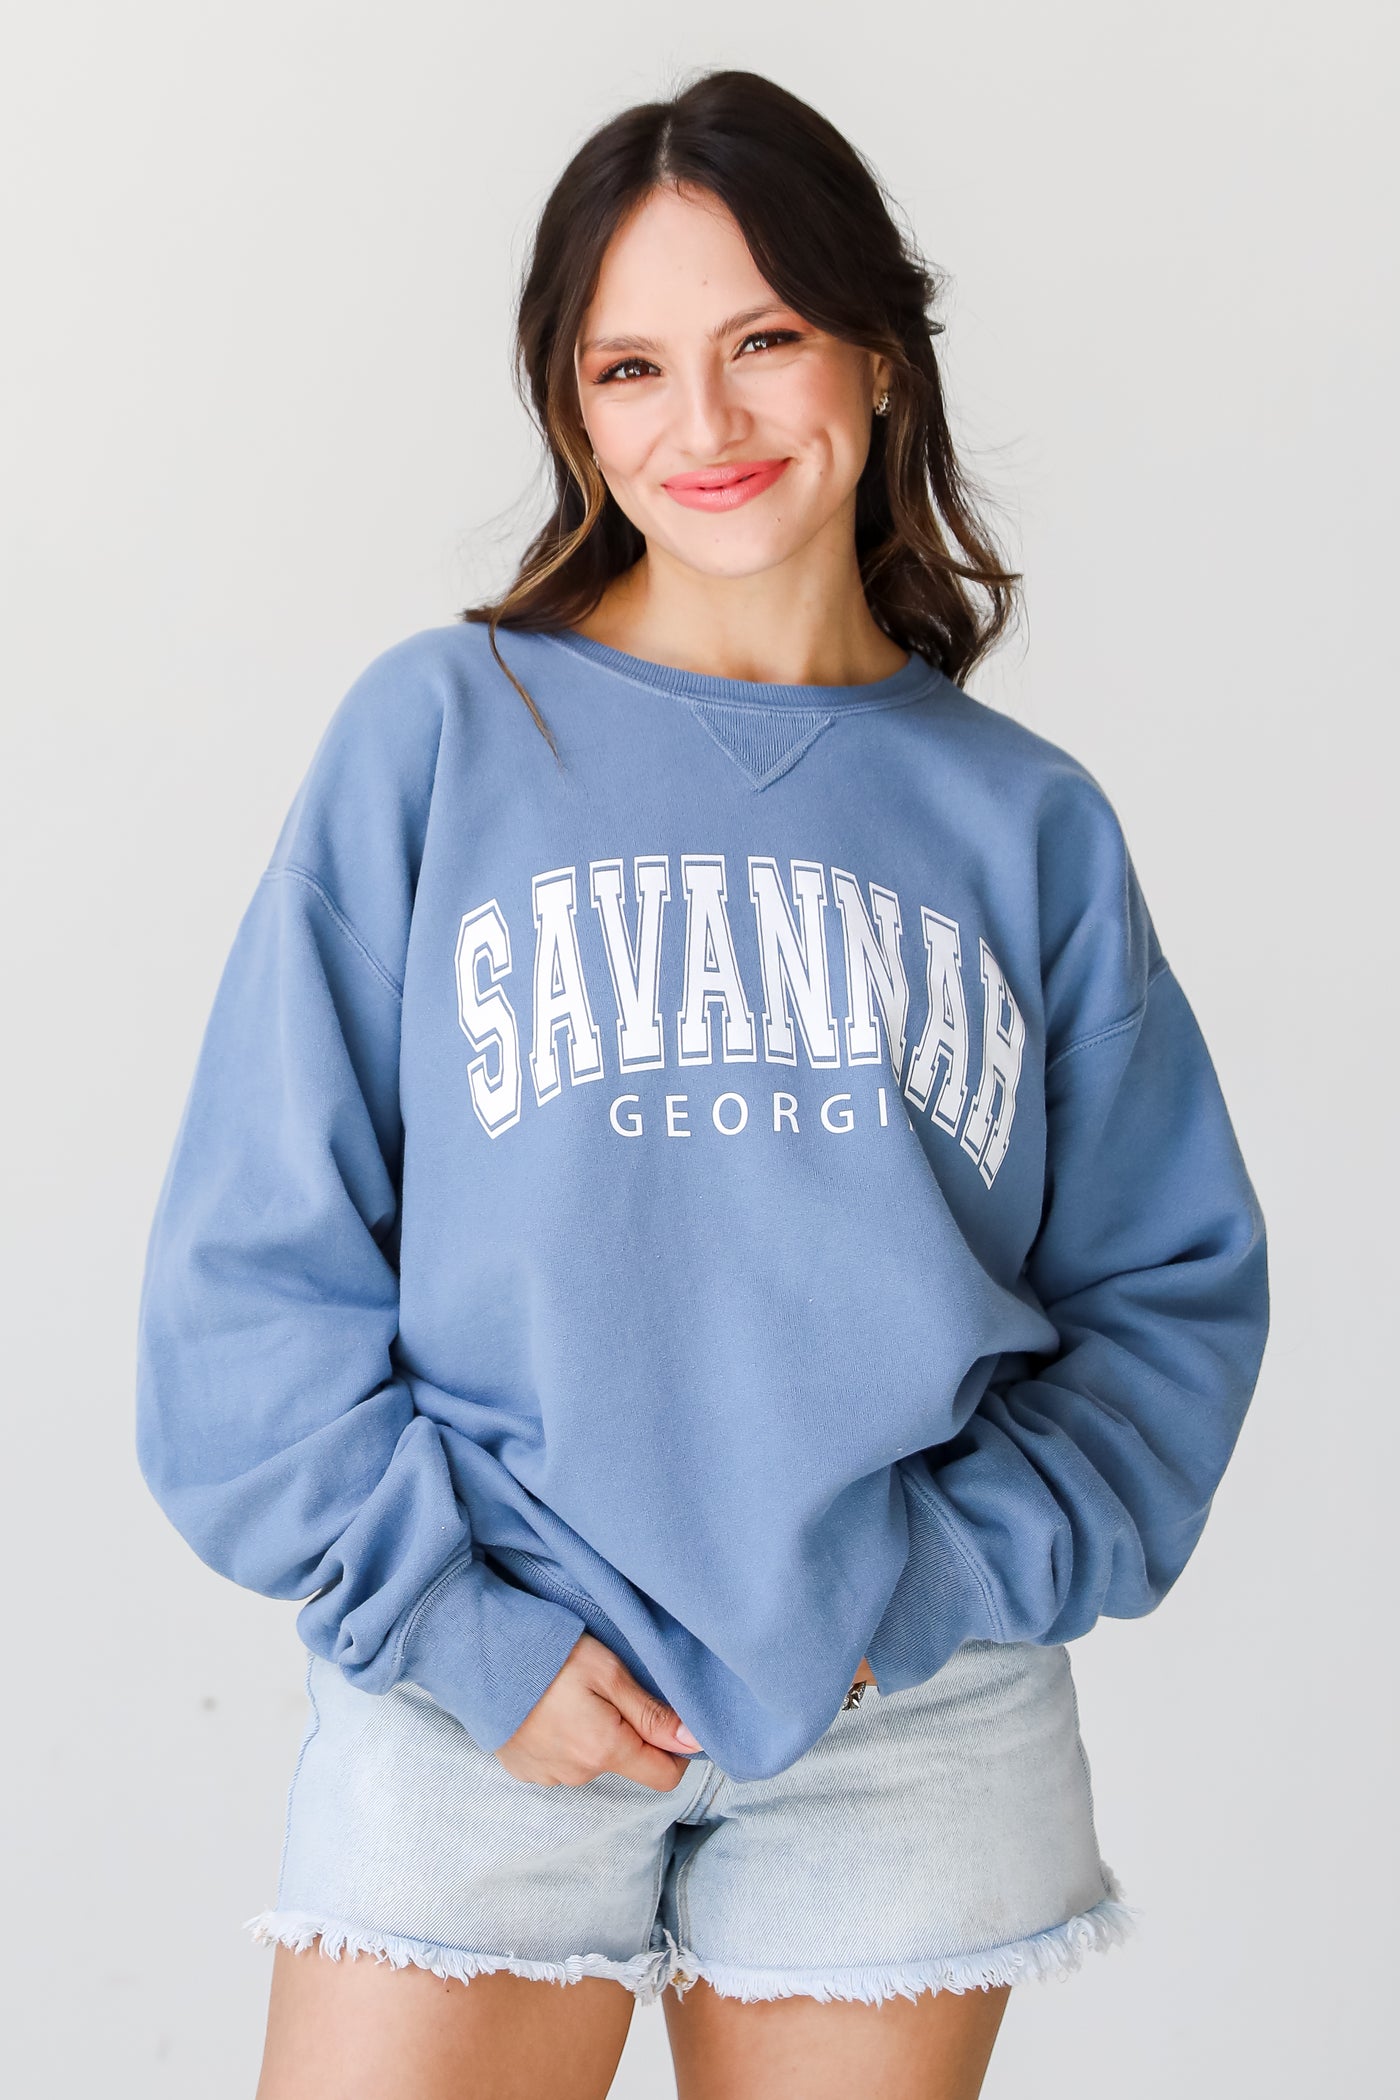 Blue Savannah Georgia Pullover on model